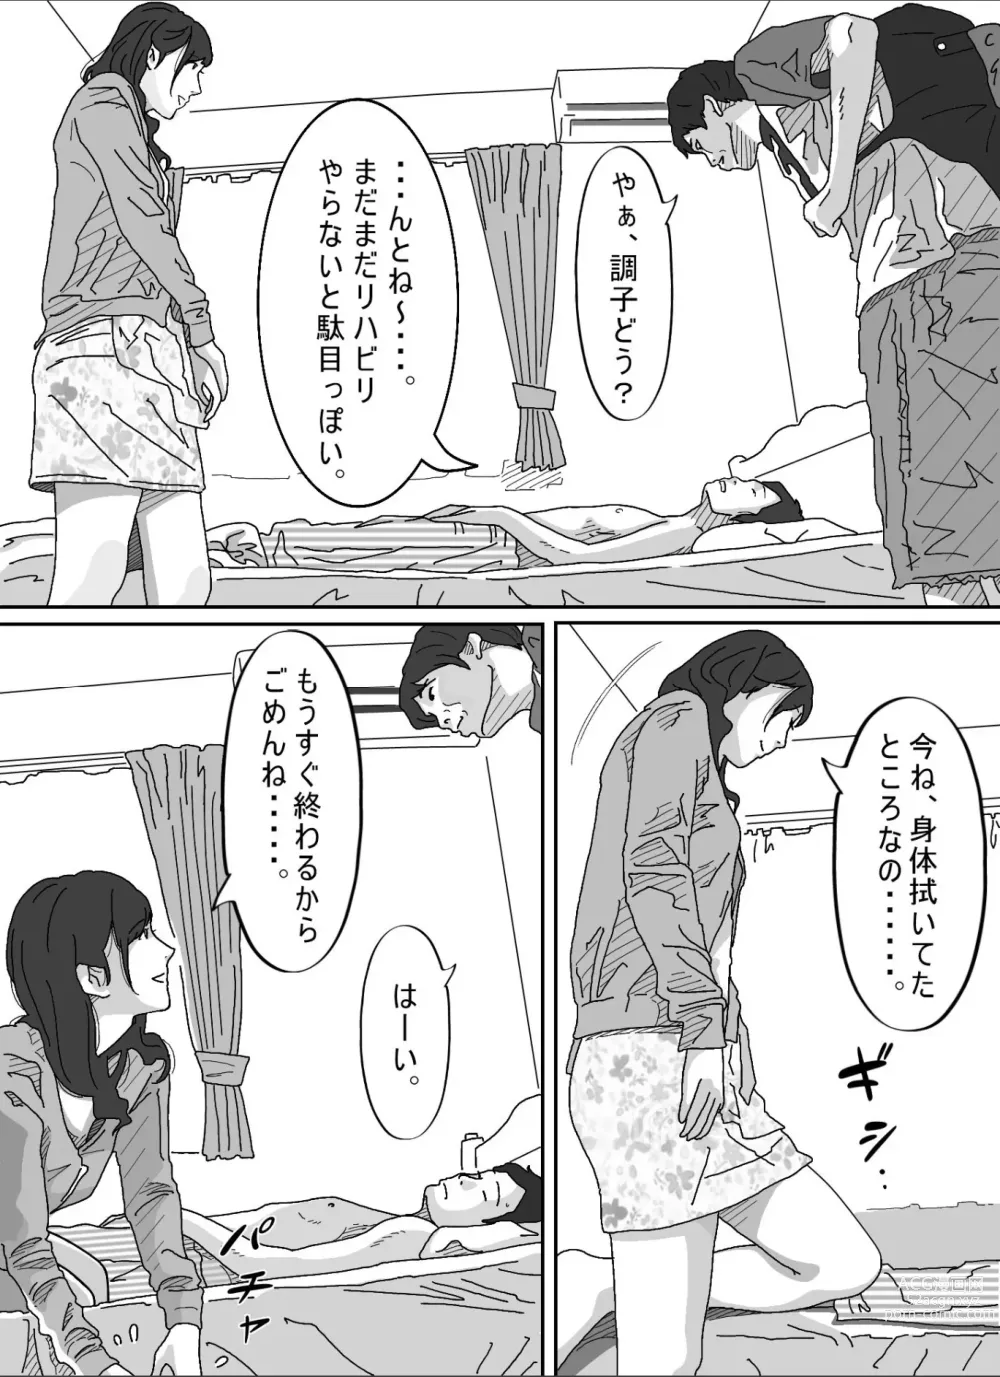 Page 6 of doujinshi Tomodachi no Okaa-san.